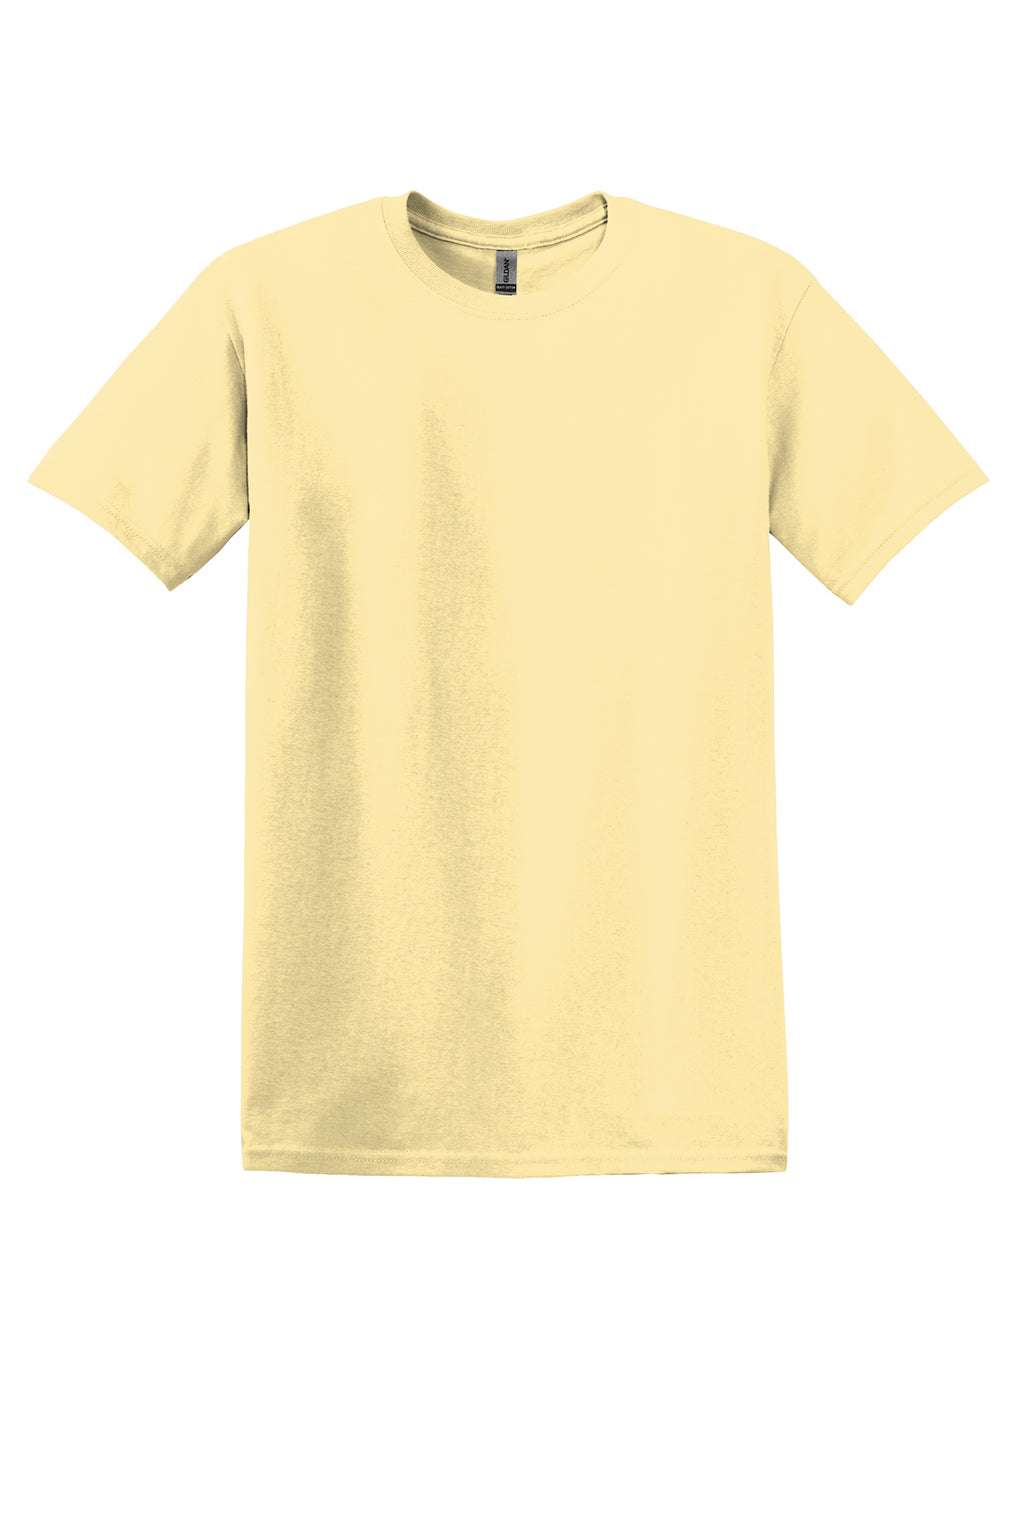 Gildan Mens/Unisex S/S Shirts Yellow Haze